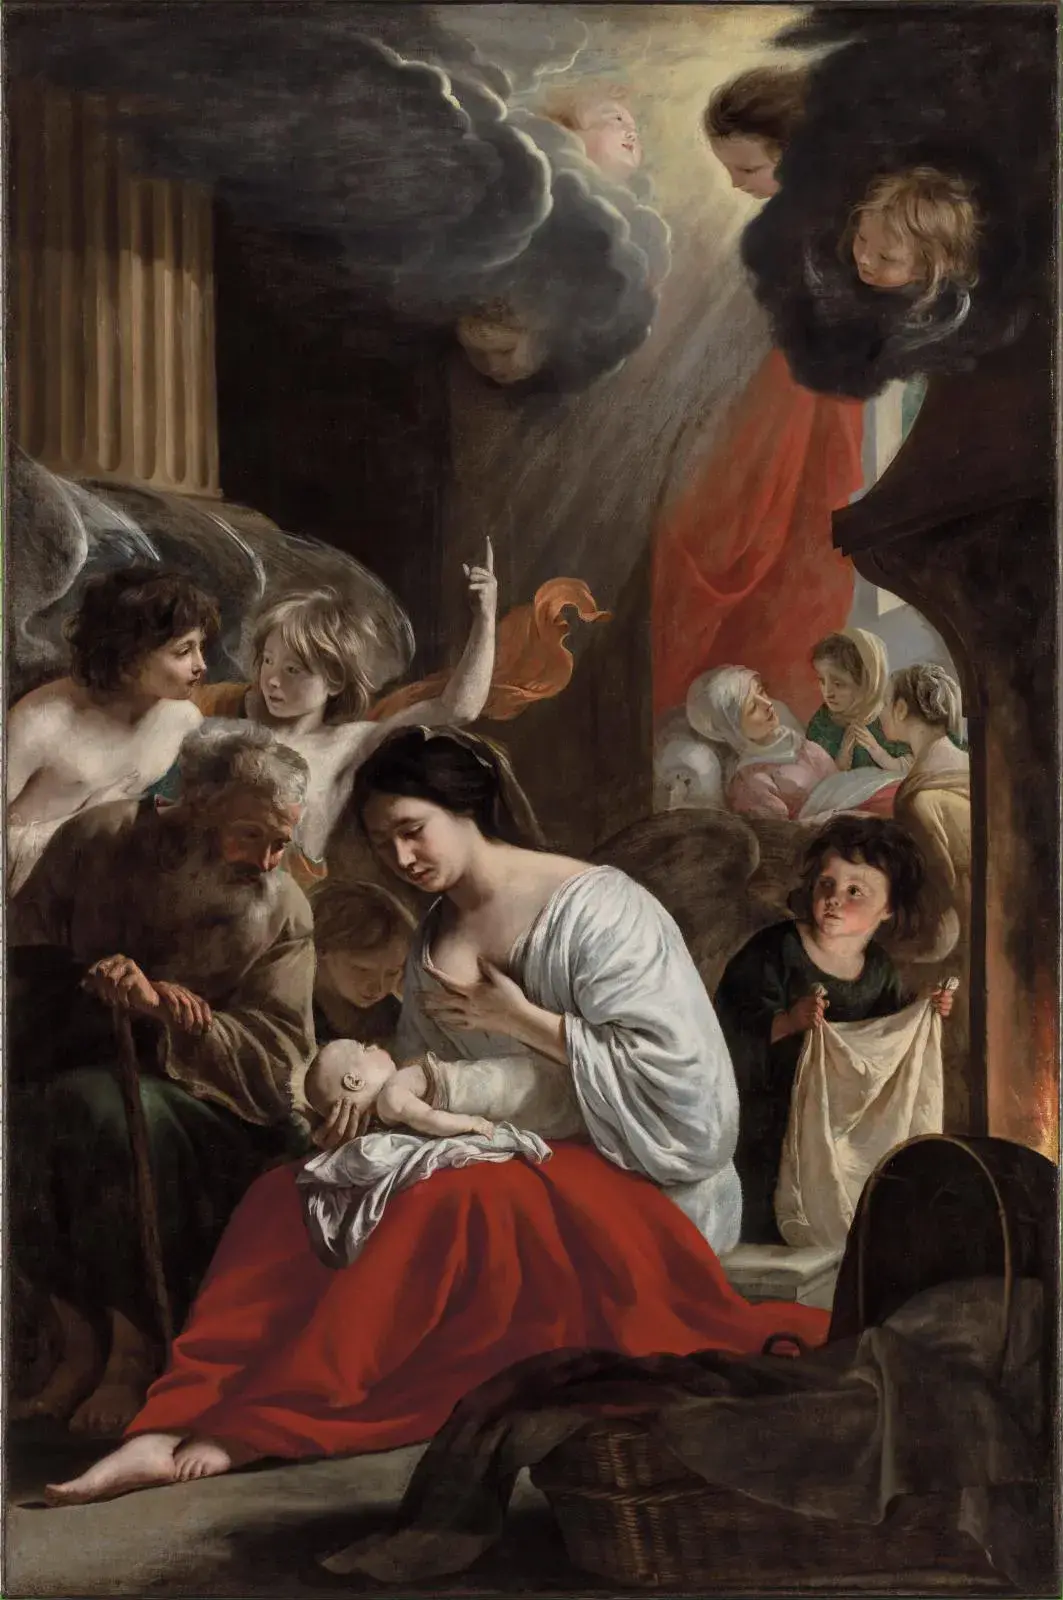 Louis (c. 1593-1648) and Matthieu Le Nain (1607-1677), The Nativity of the Virgin, 1640.
© DRAC Île-de-France